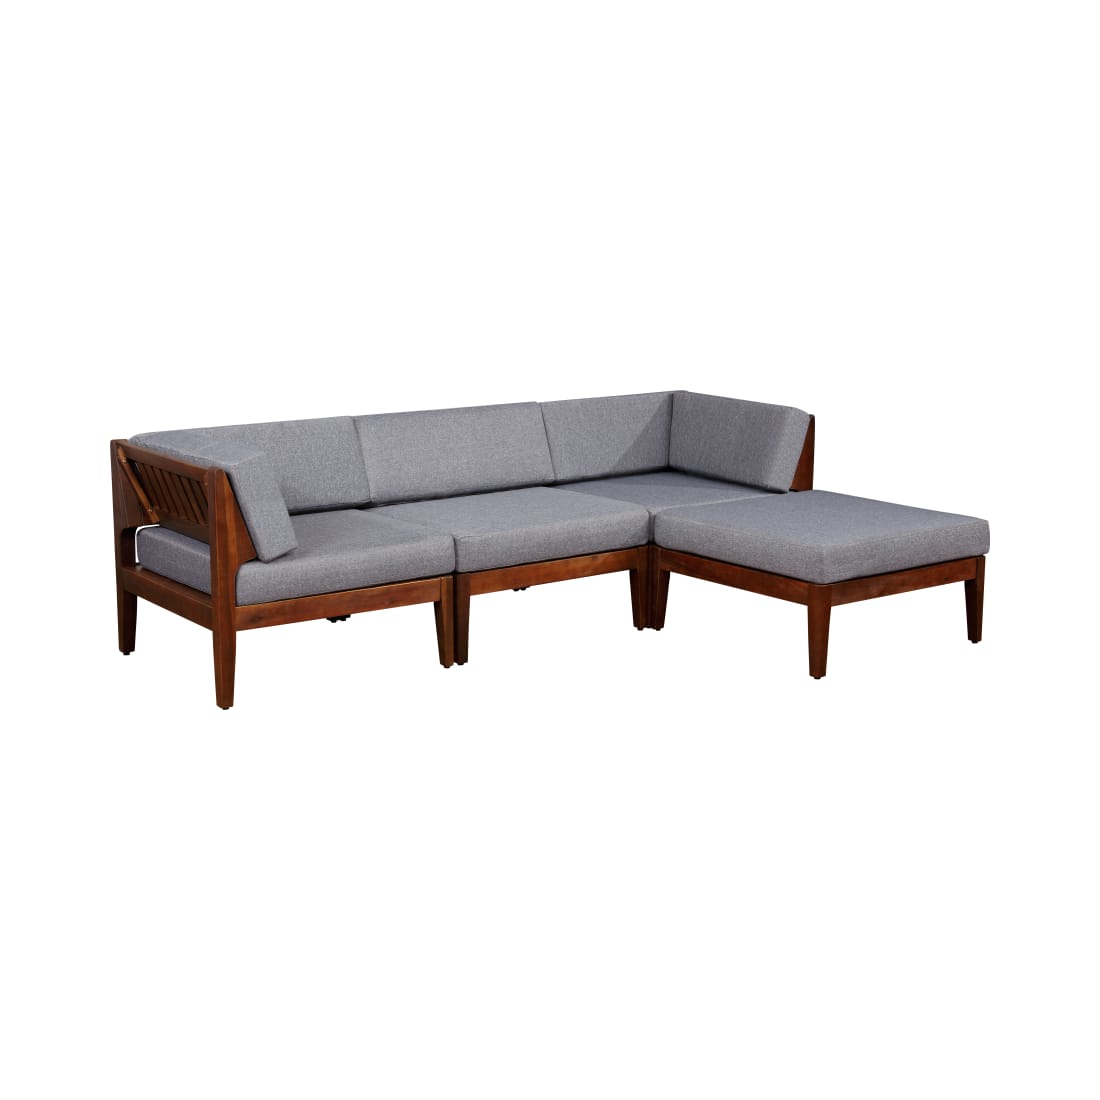 Larkin Collection Walnut Patio Sofa Set